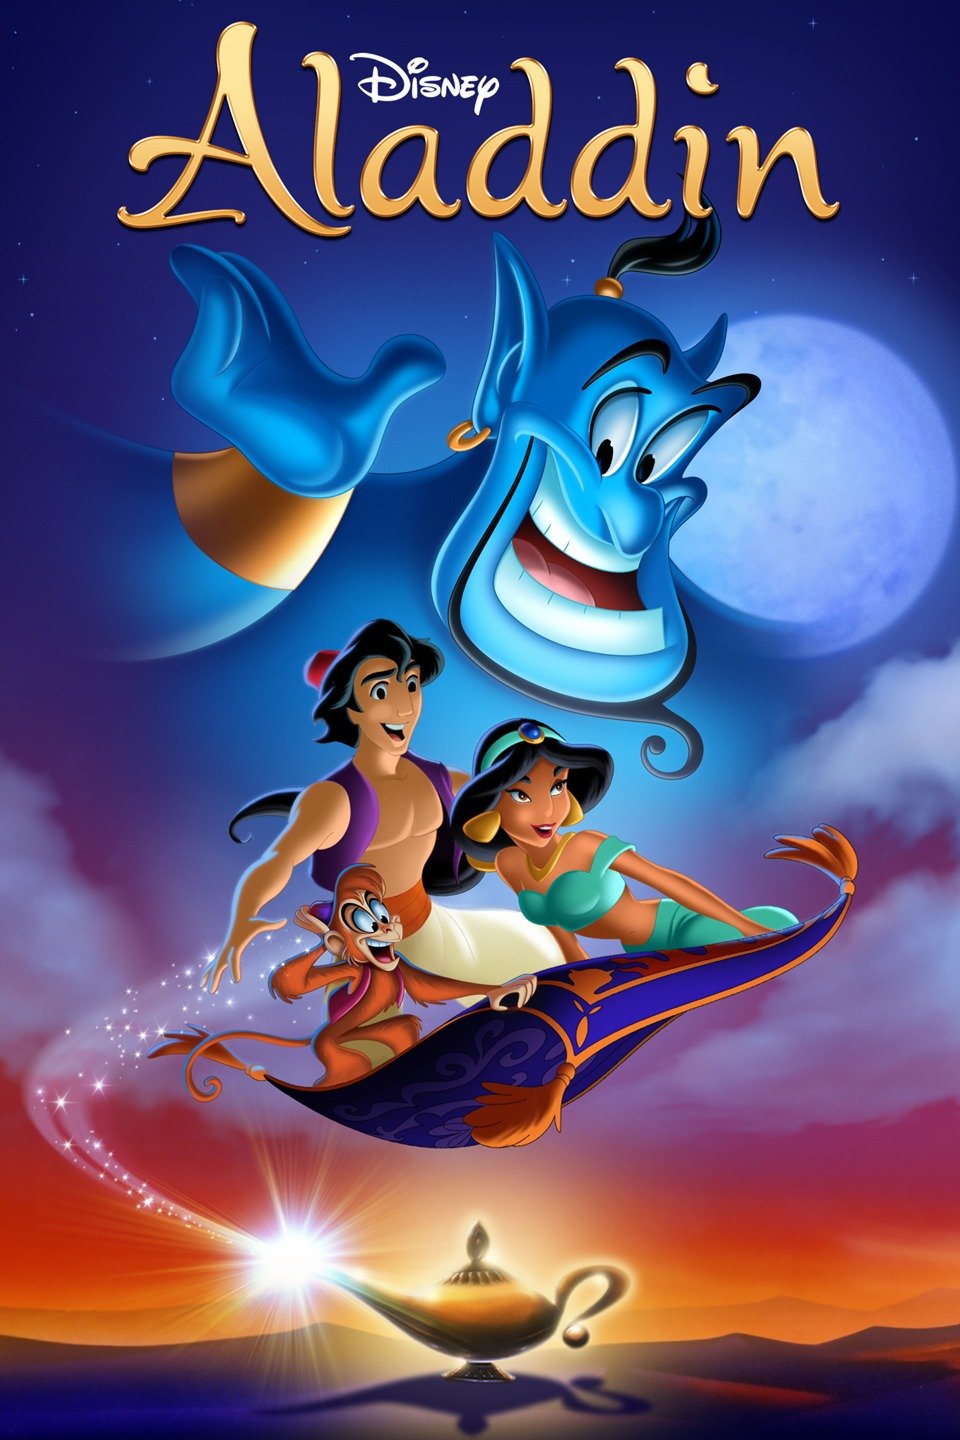 FULL MOVIE: Aladdin (1992)